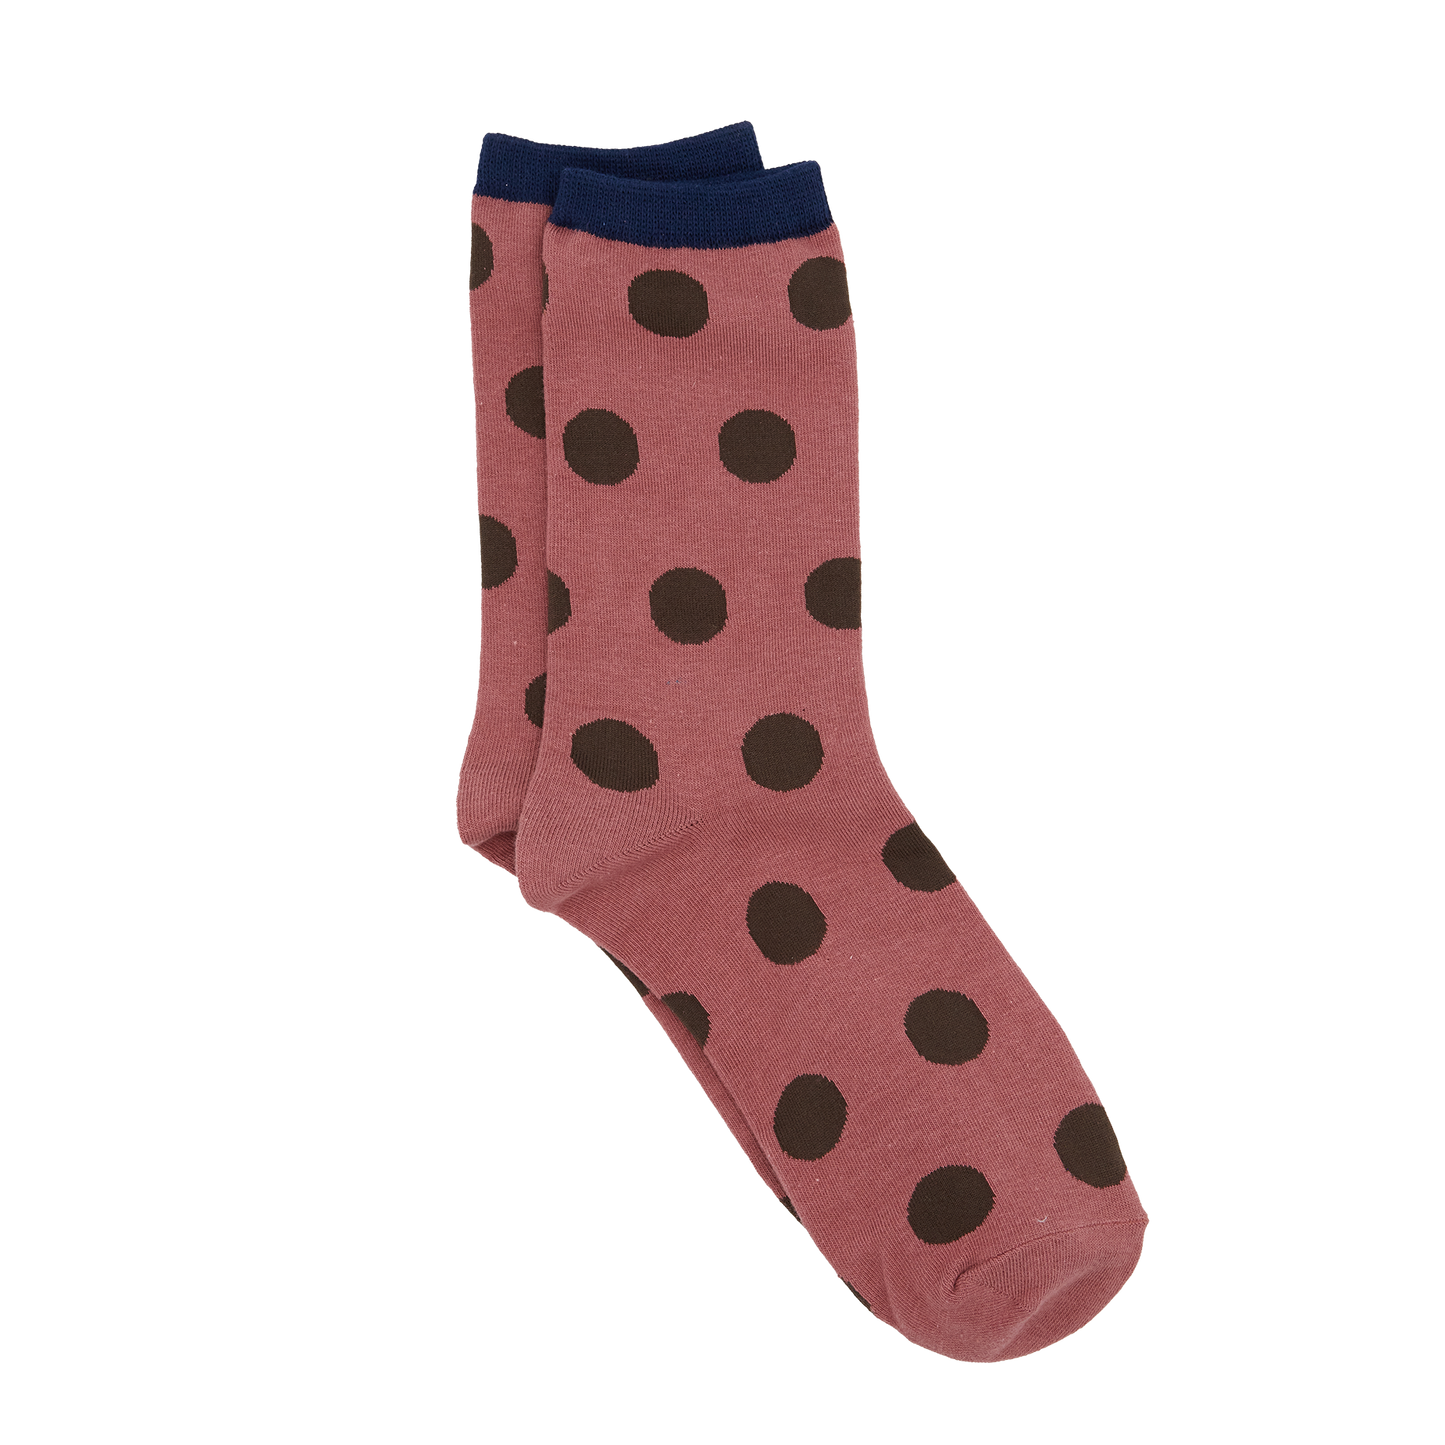 Polka dot socks rose with choc spots